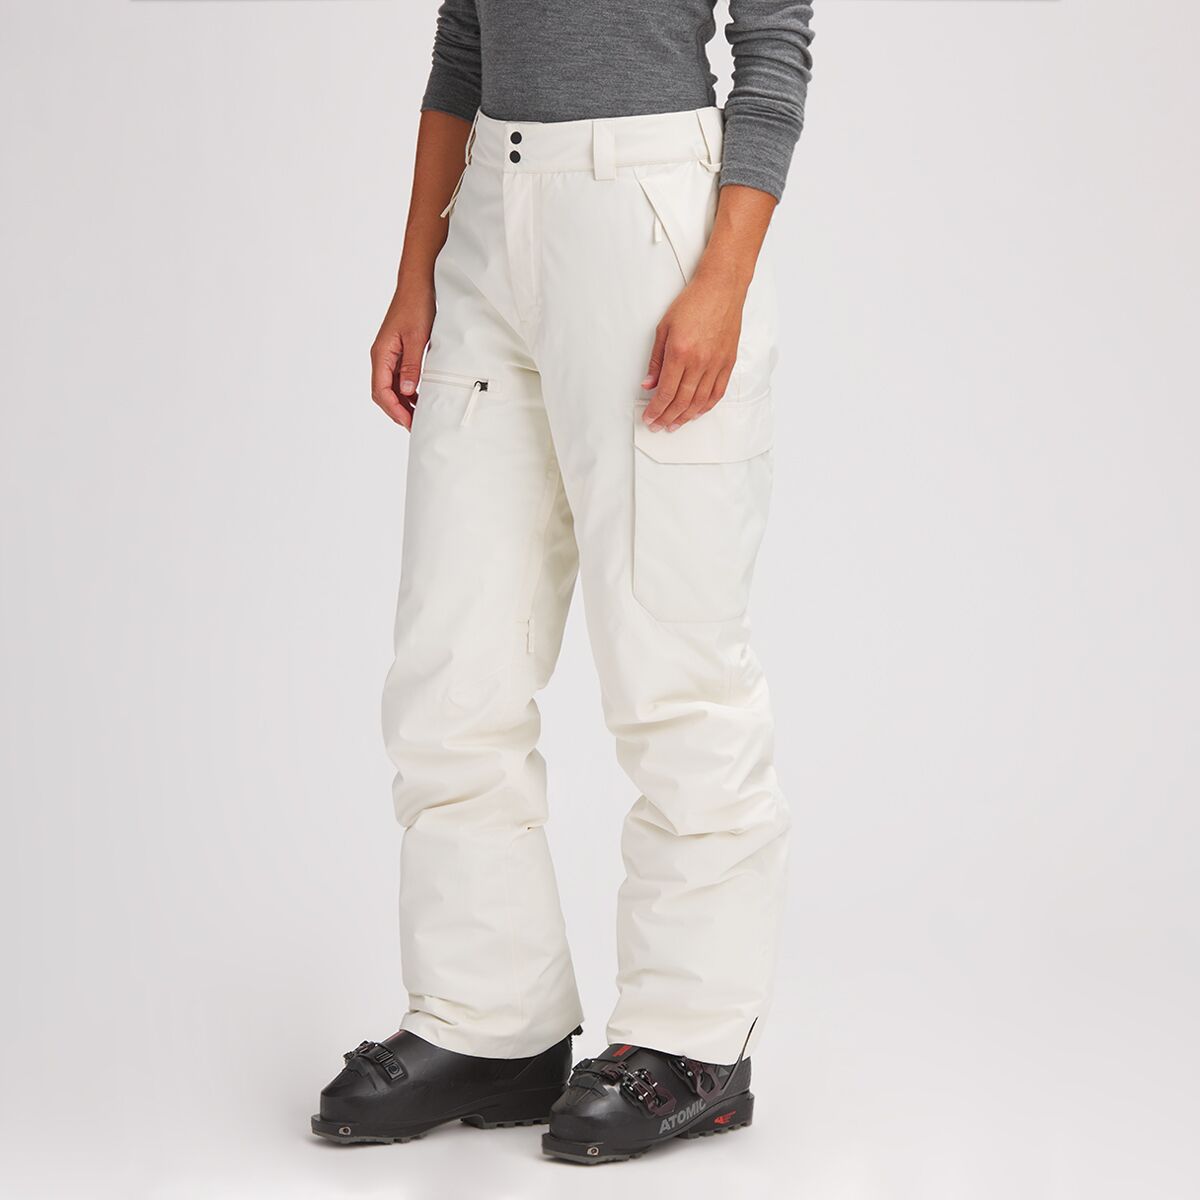 buy snow pants online